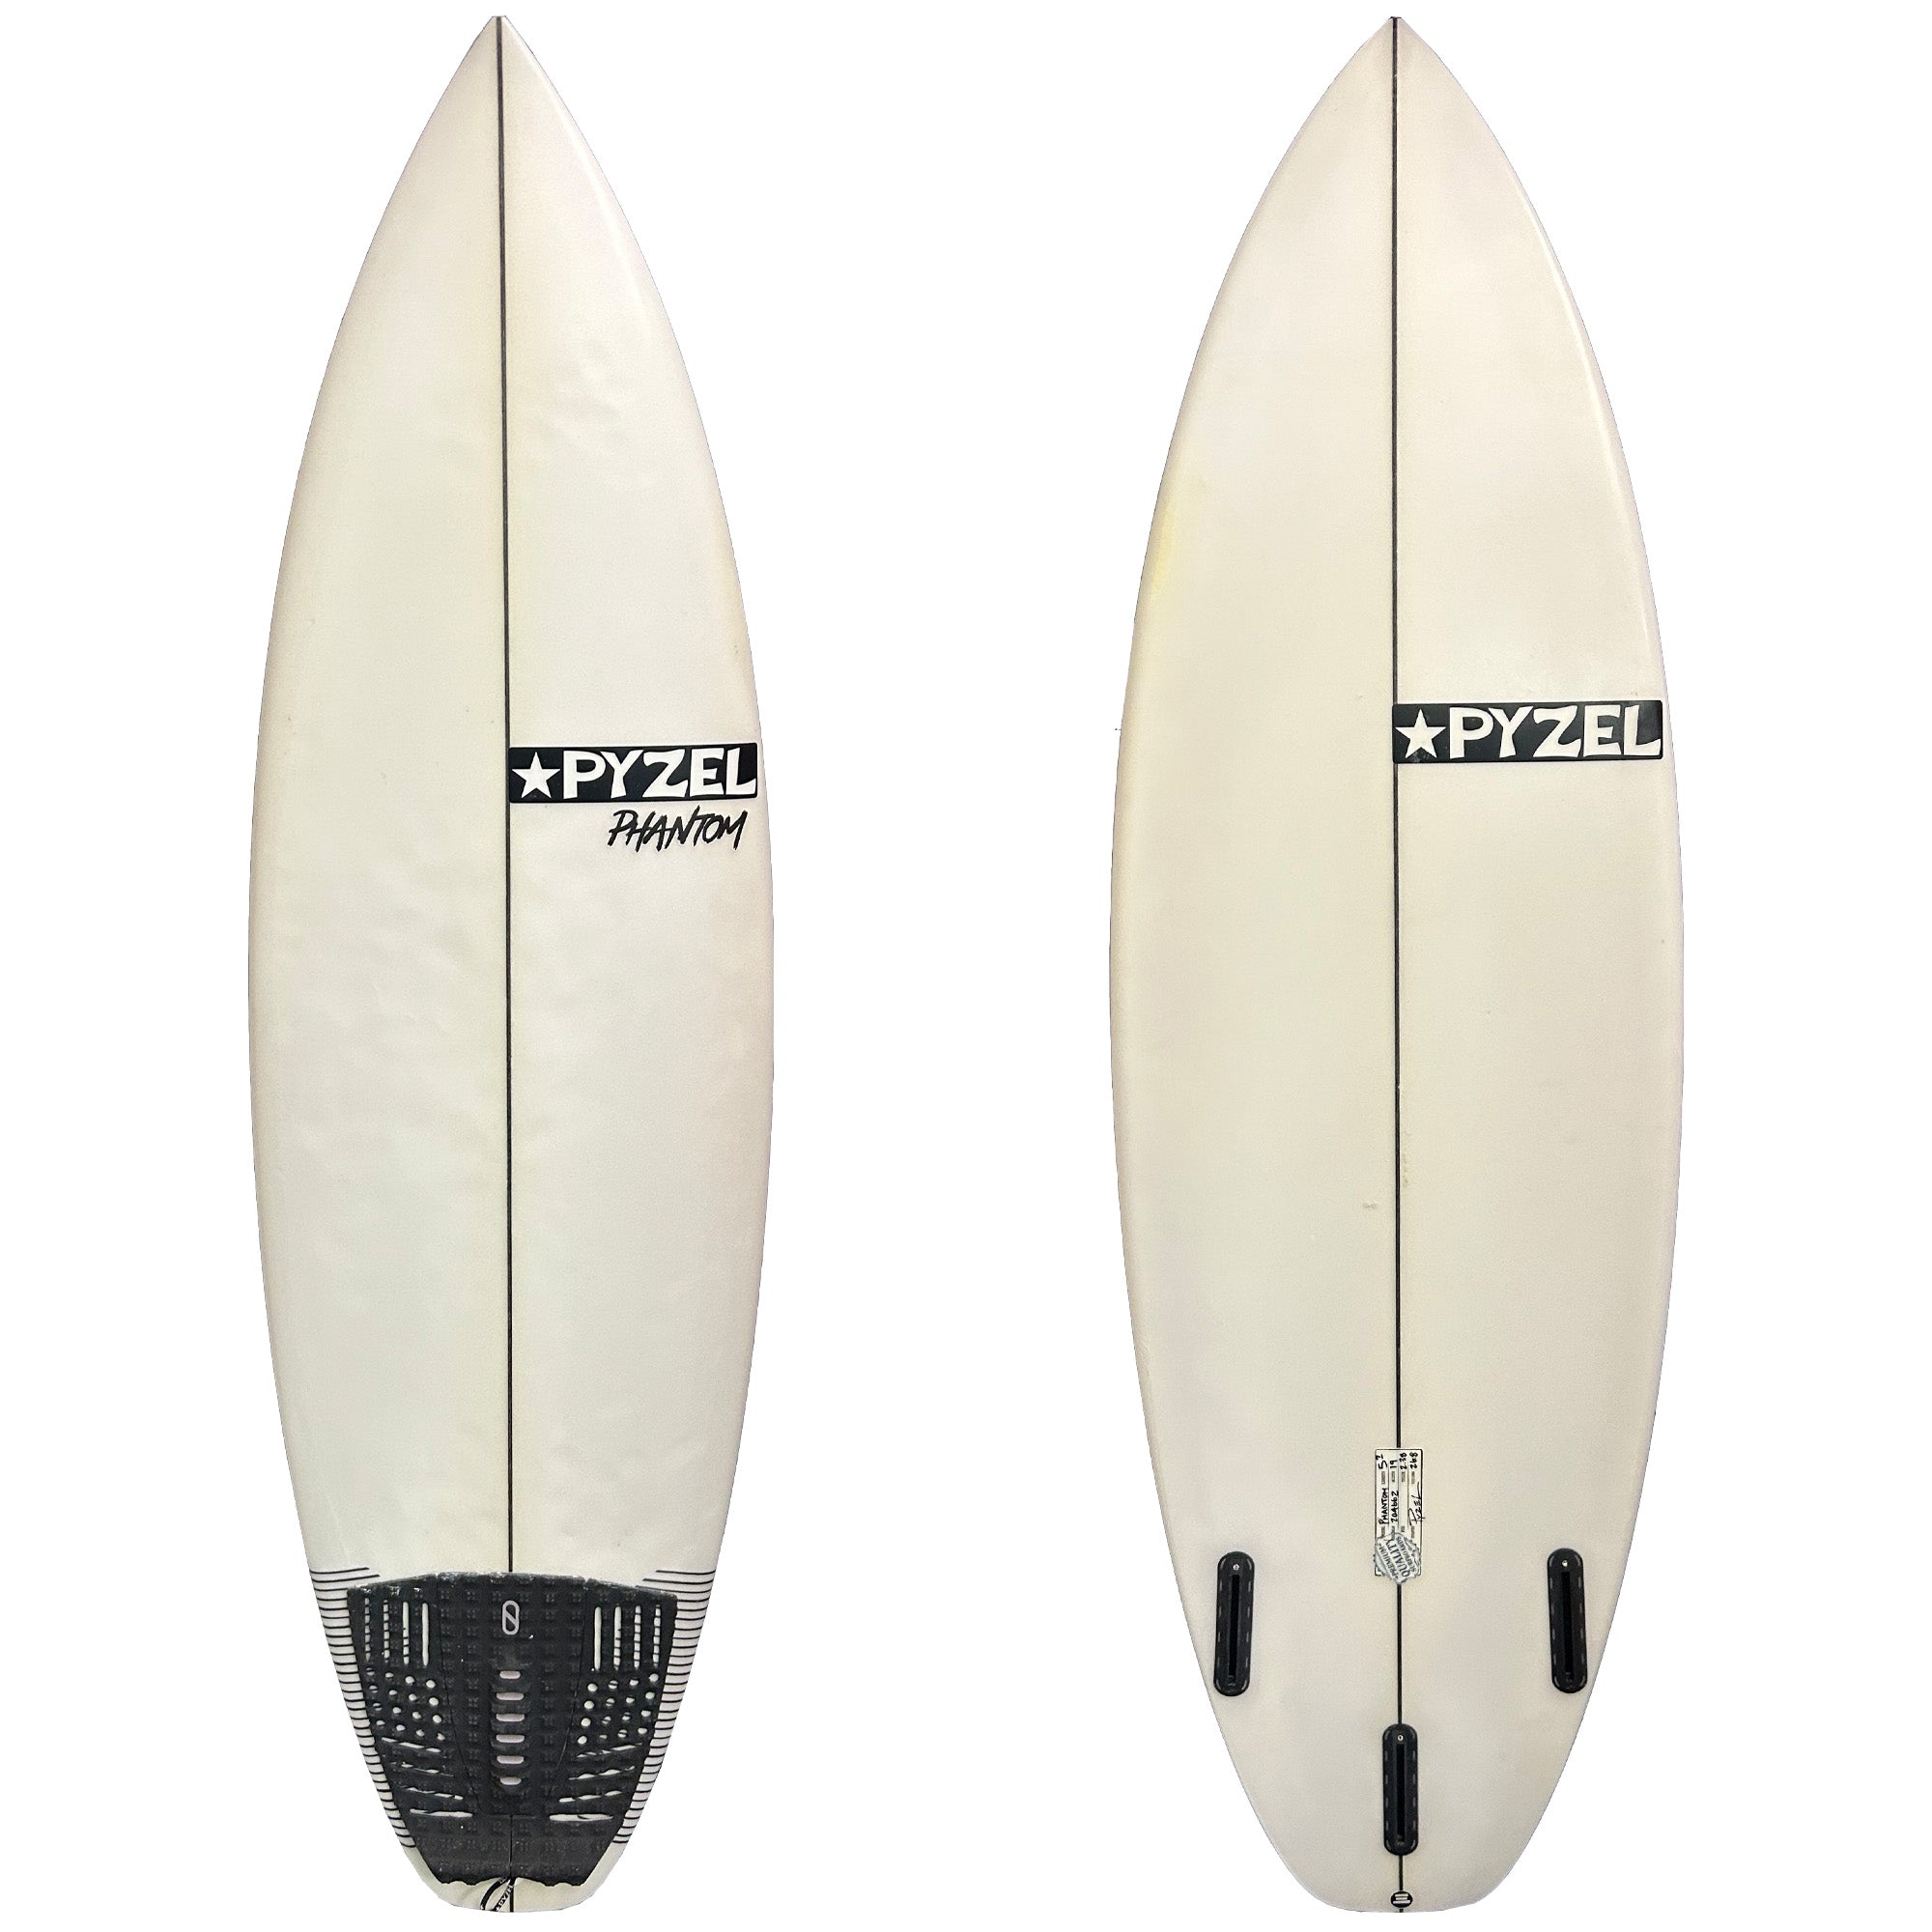 Pyzel Phantom 5'7 Used Surfboard